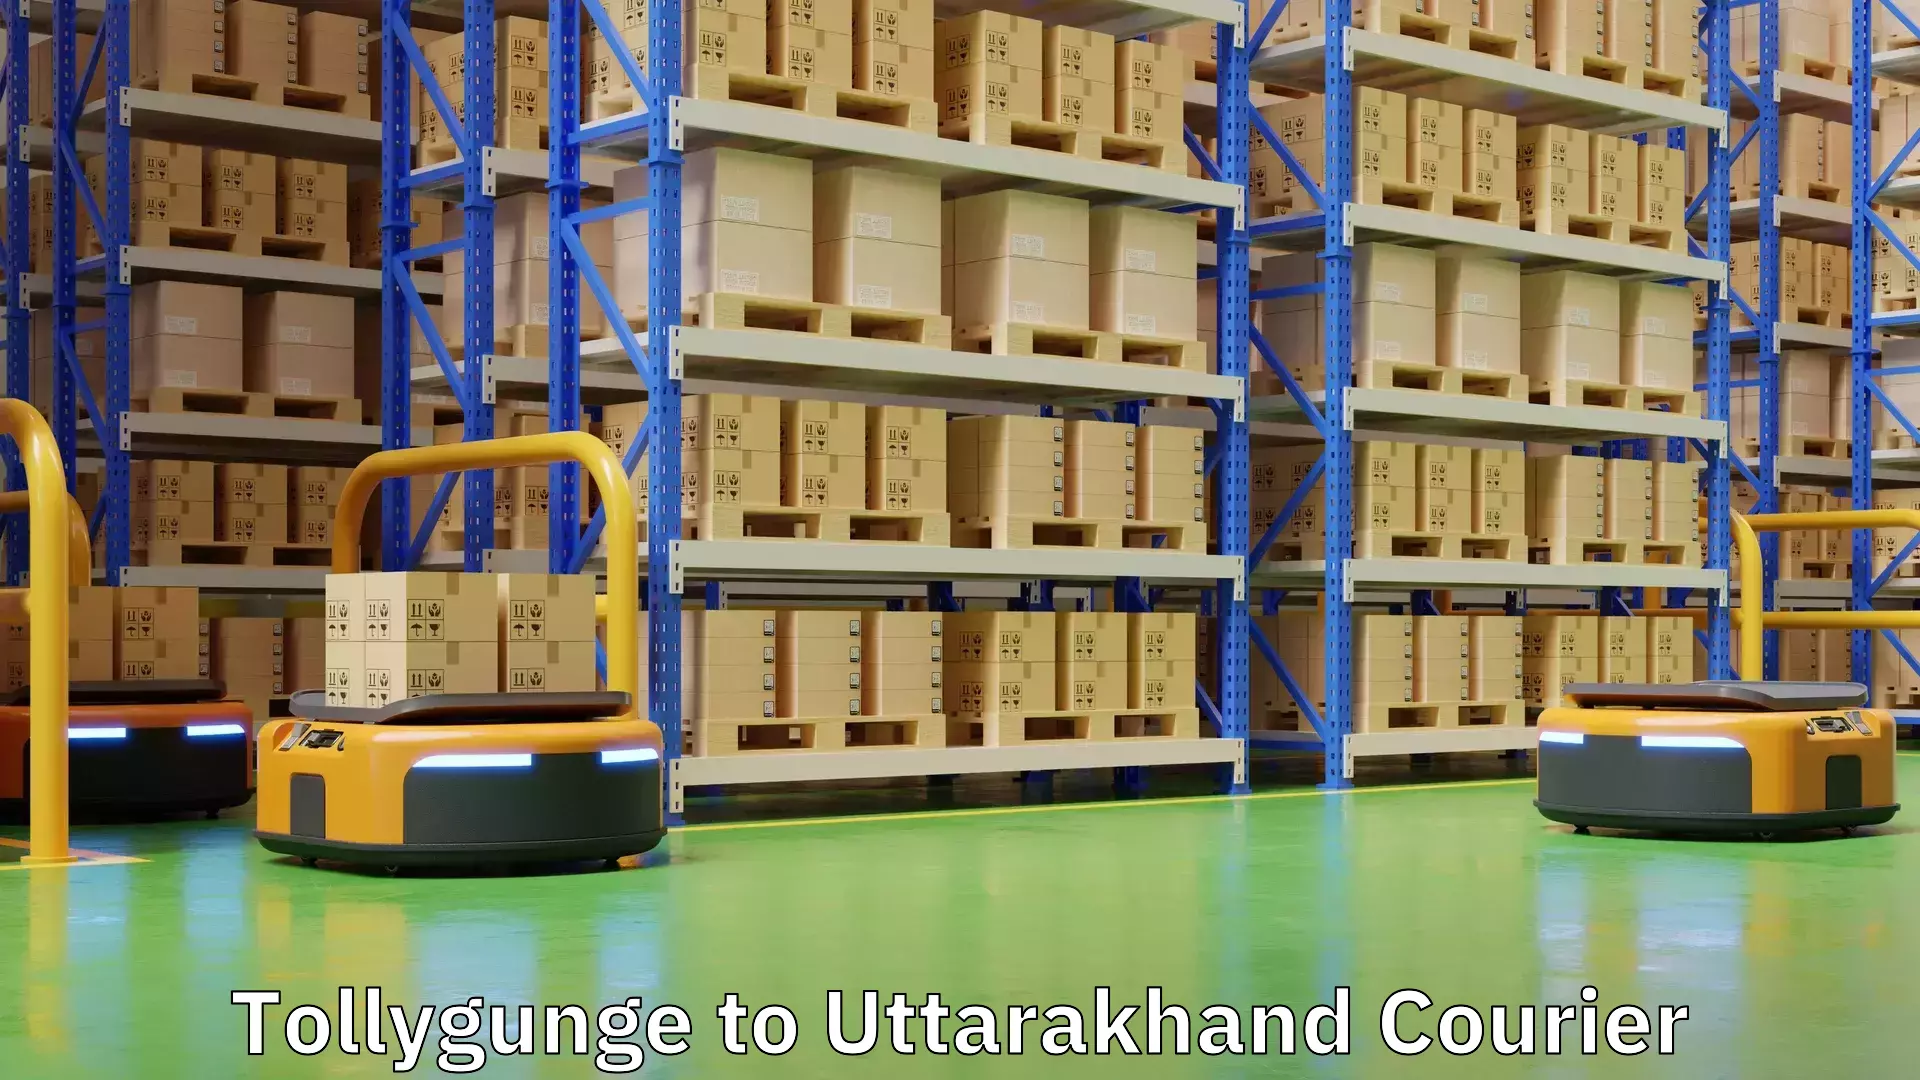 Advanced shipping network Tollygunge to Uttarakhand